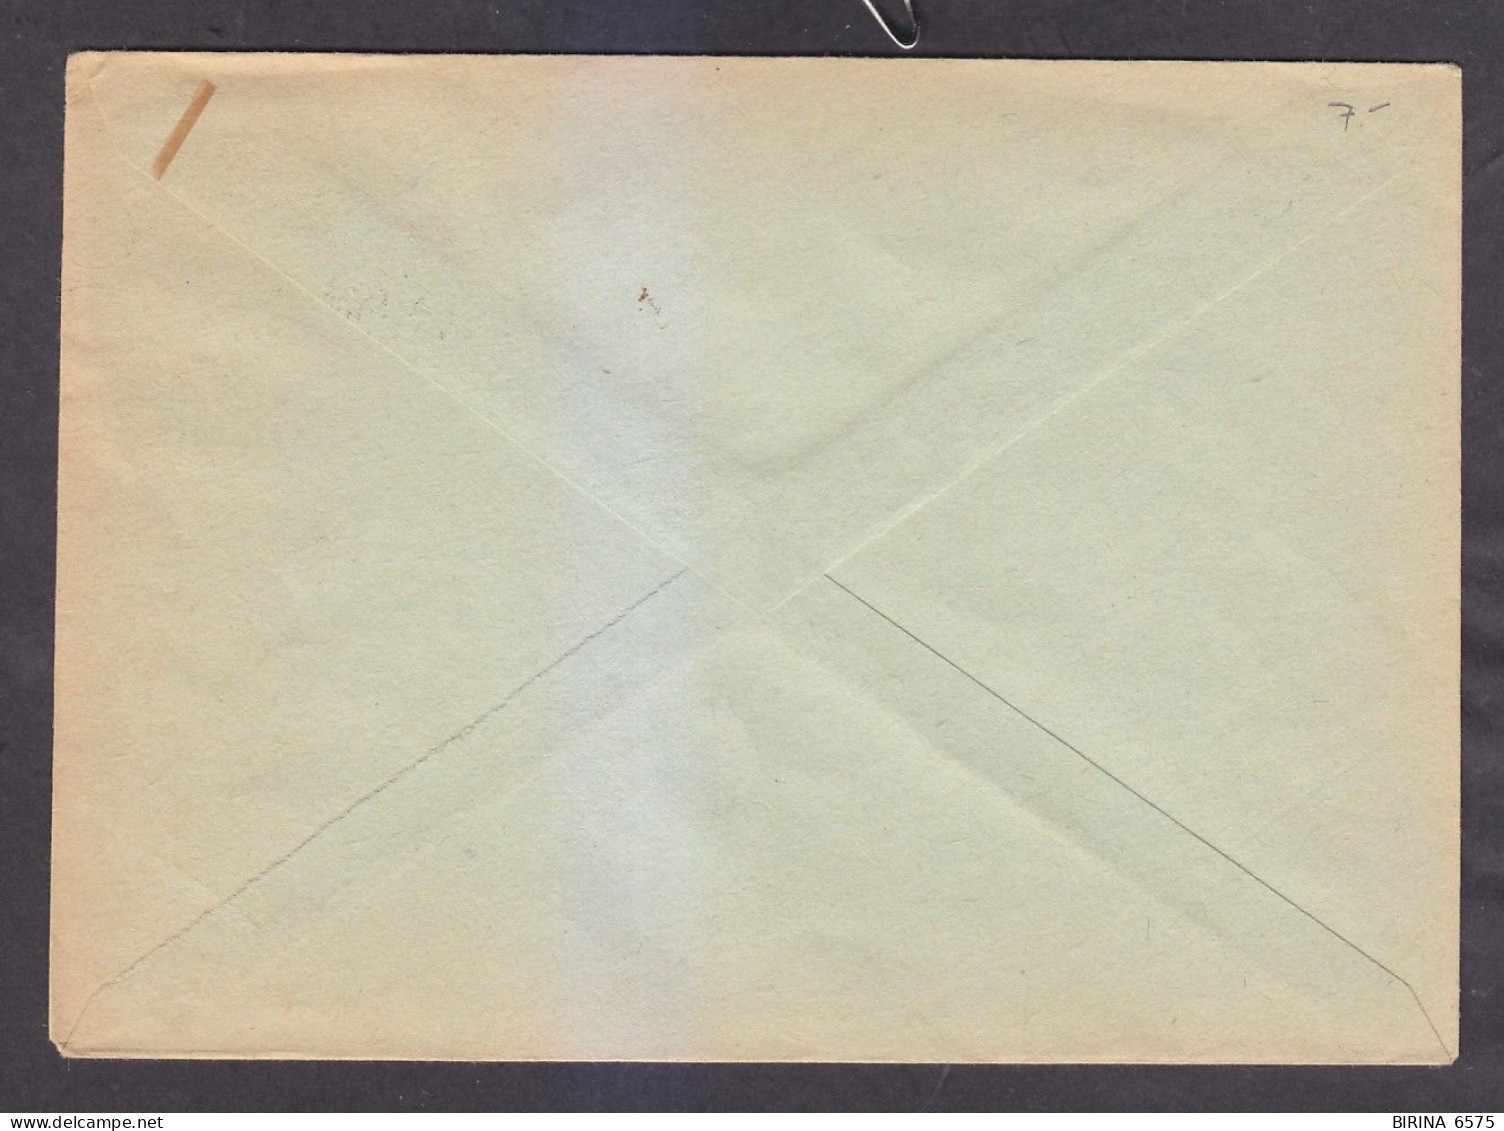 Envelope. The USSR. COSMOS. 3000 REVOLUTIONS OF THE THIRD SATELLITE. 1958. - 8-91 - Briefe U. Dokumente